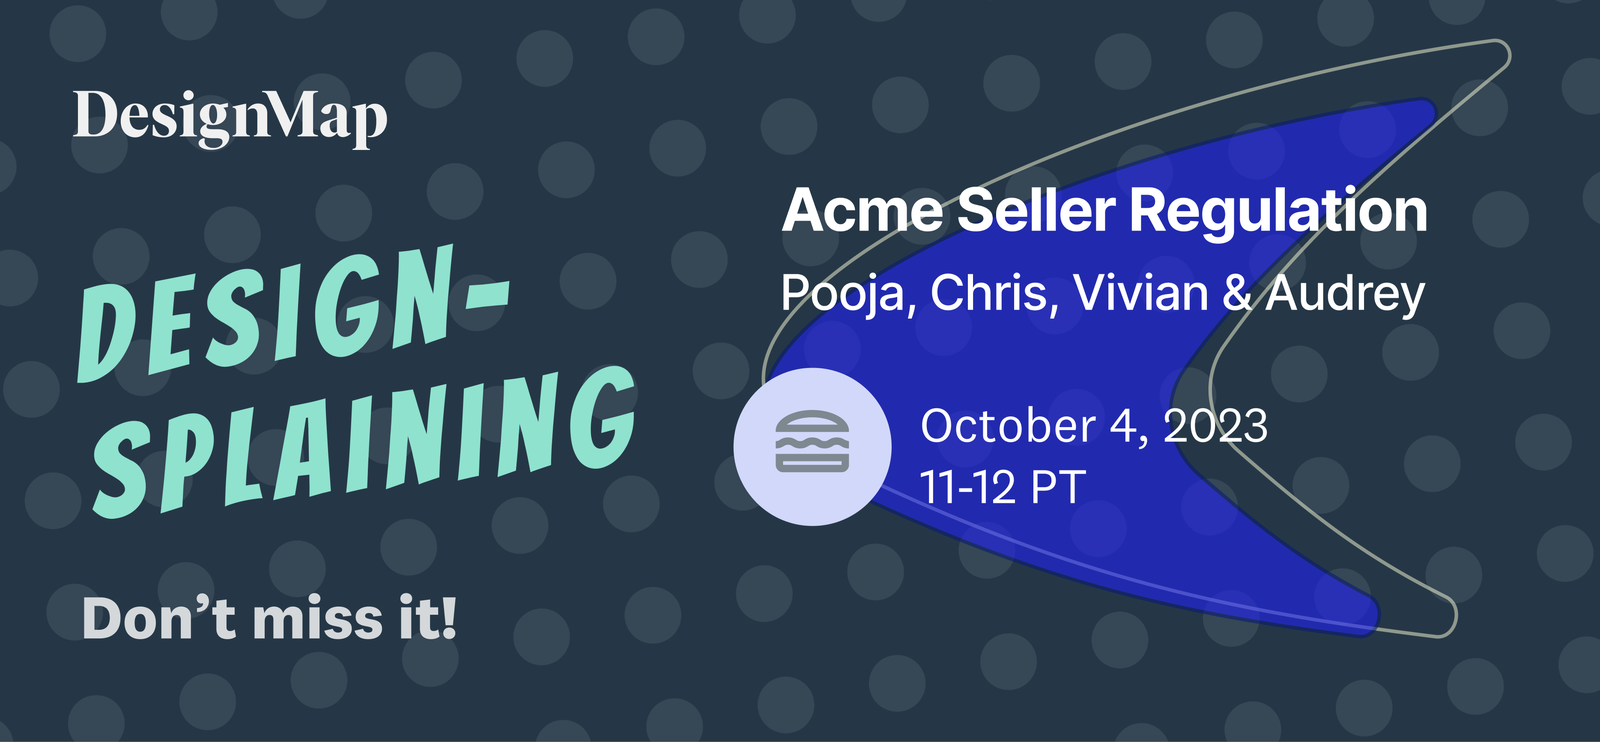 DesignSplaining! Don't miss it! Acme Selller Regulation with Pooja, Chris, Vivian, and Audrey. October 4,2023